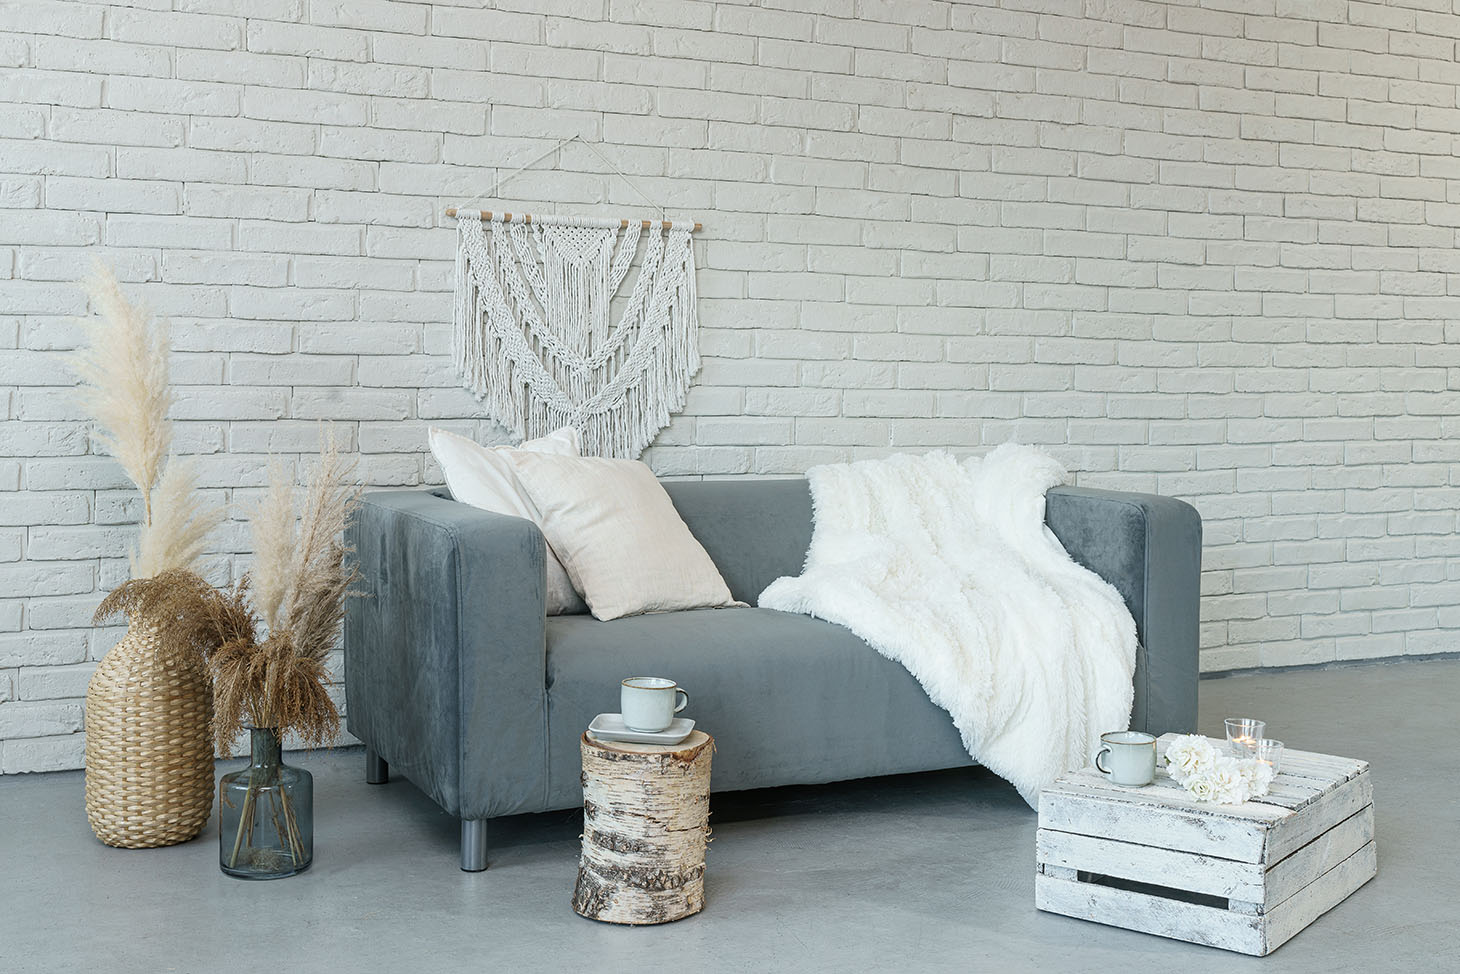 IKEA Klippan 2 Seater in Iron Grey Velvet Sofa Cover